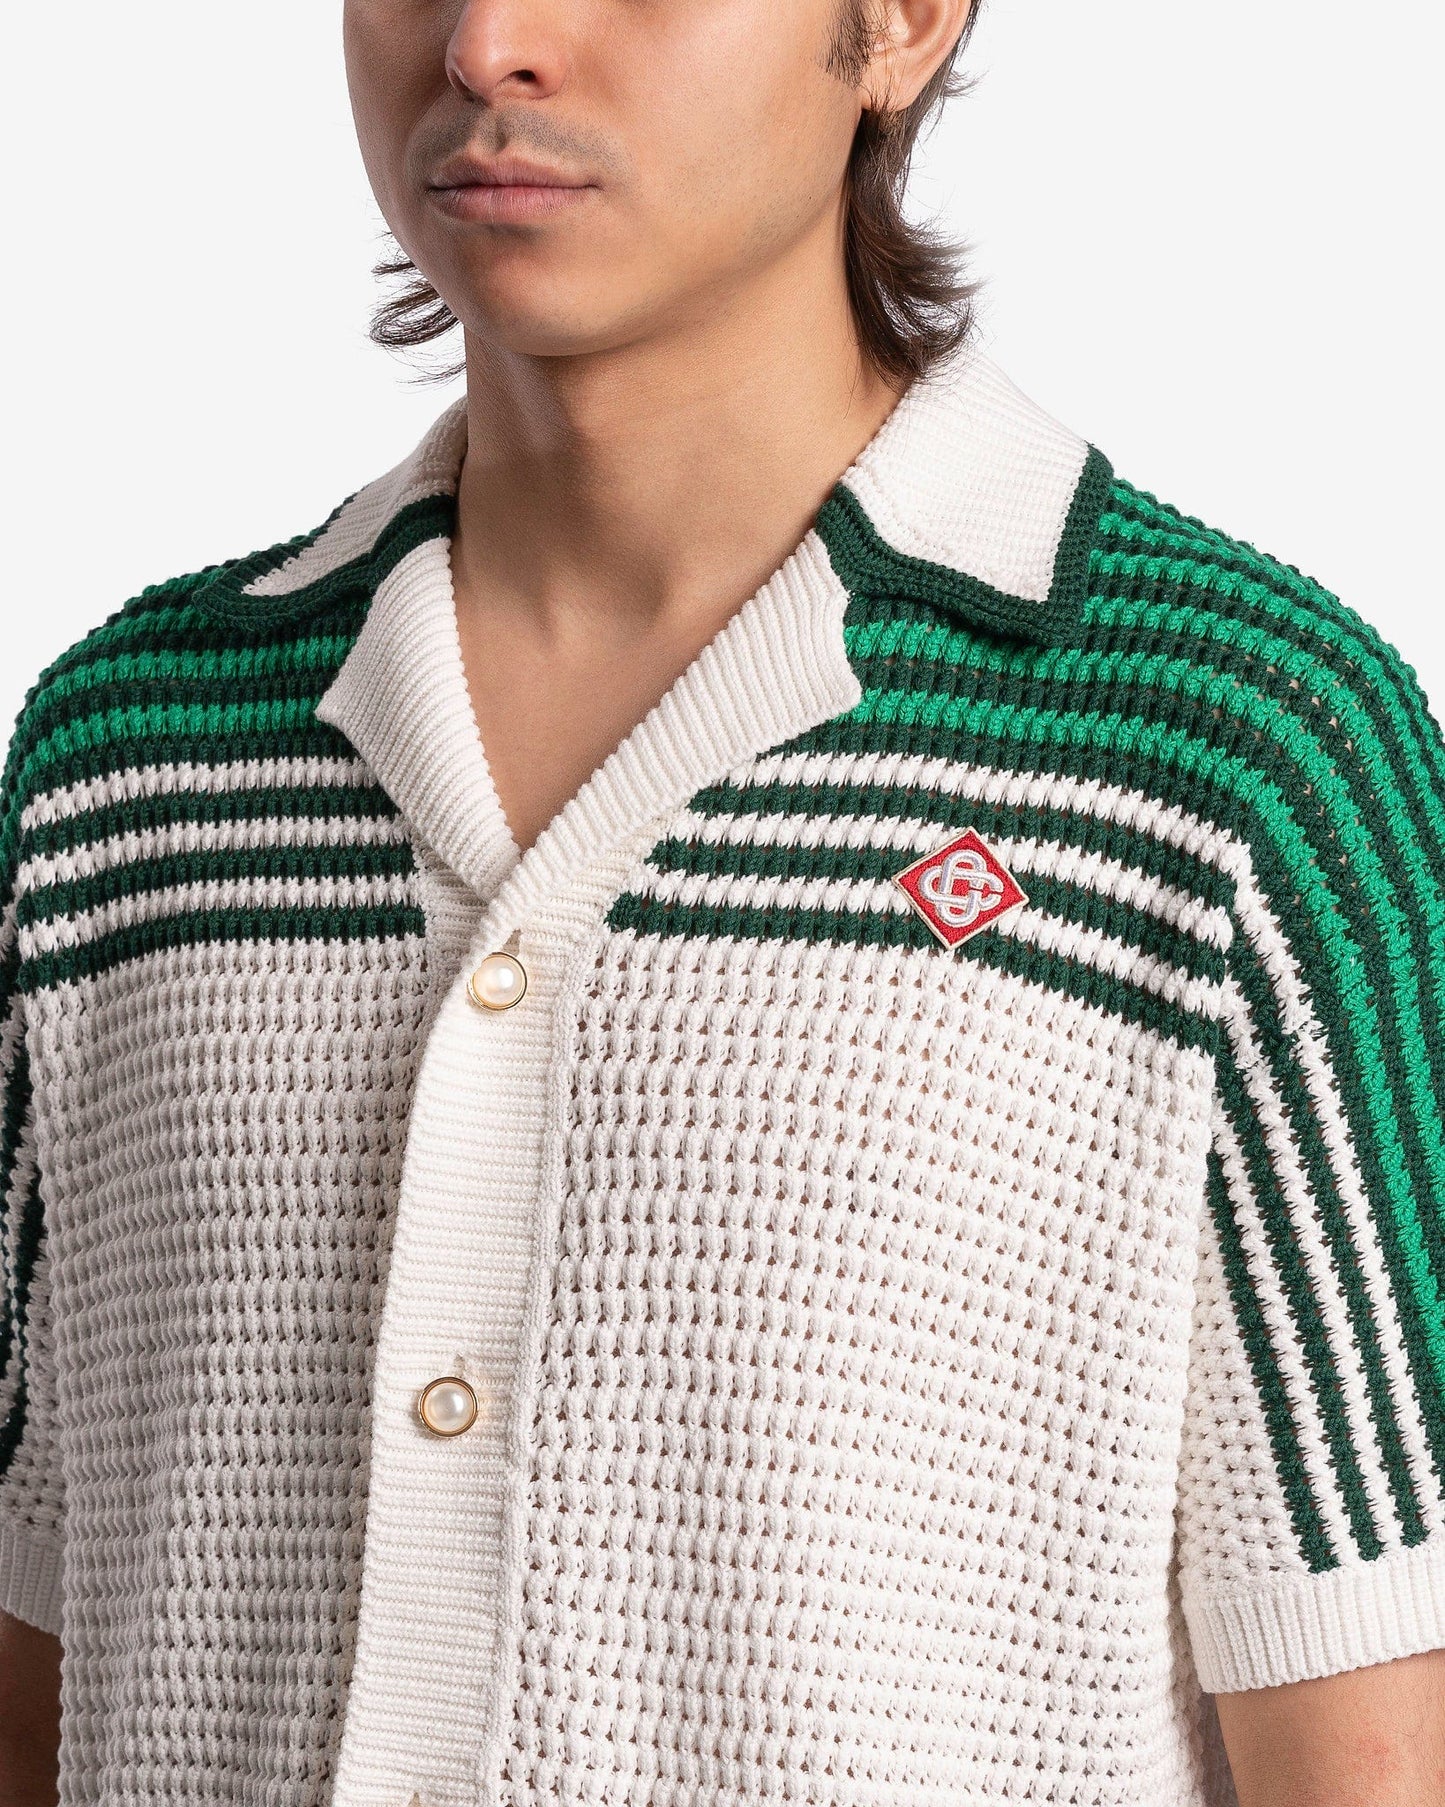 Casablanca Men's Shirts Tennis Crochet Shirt in Green/White